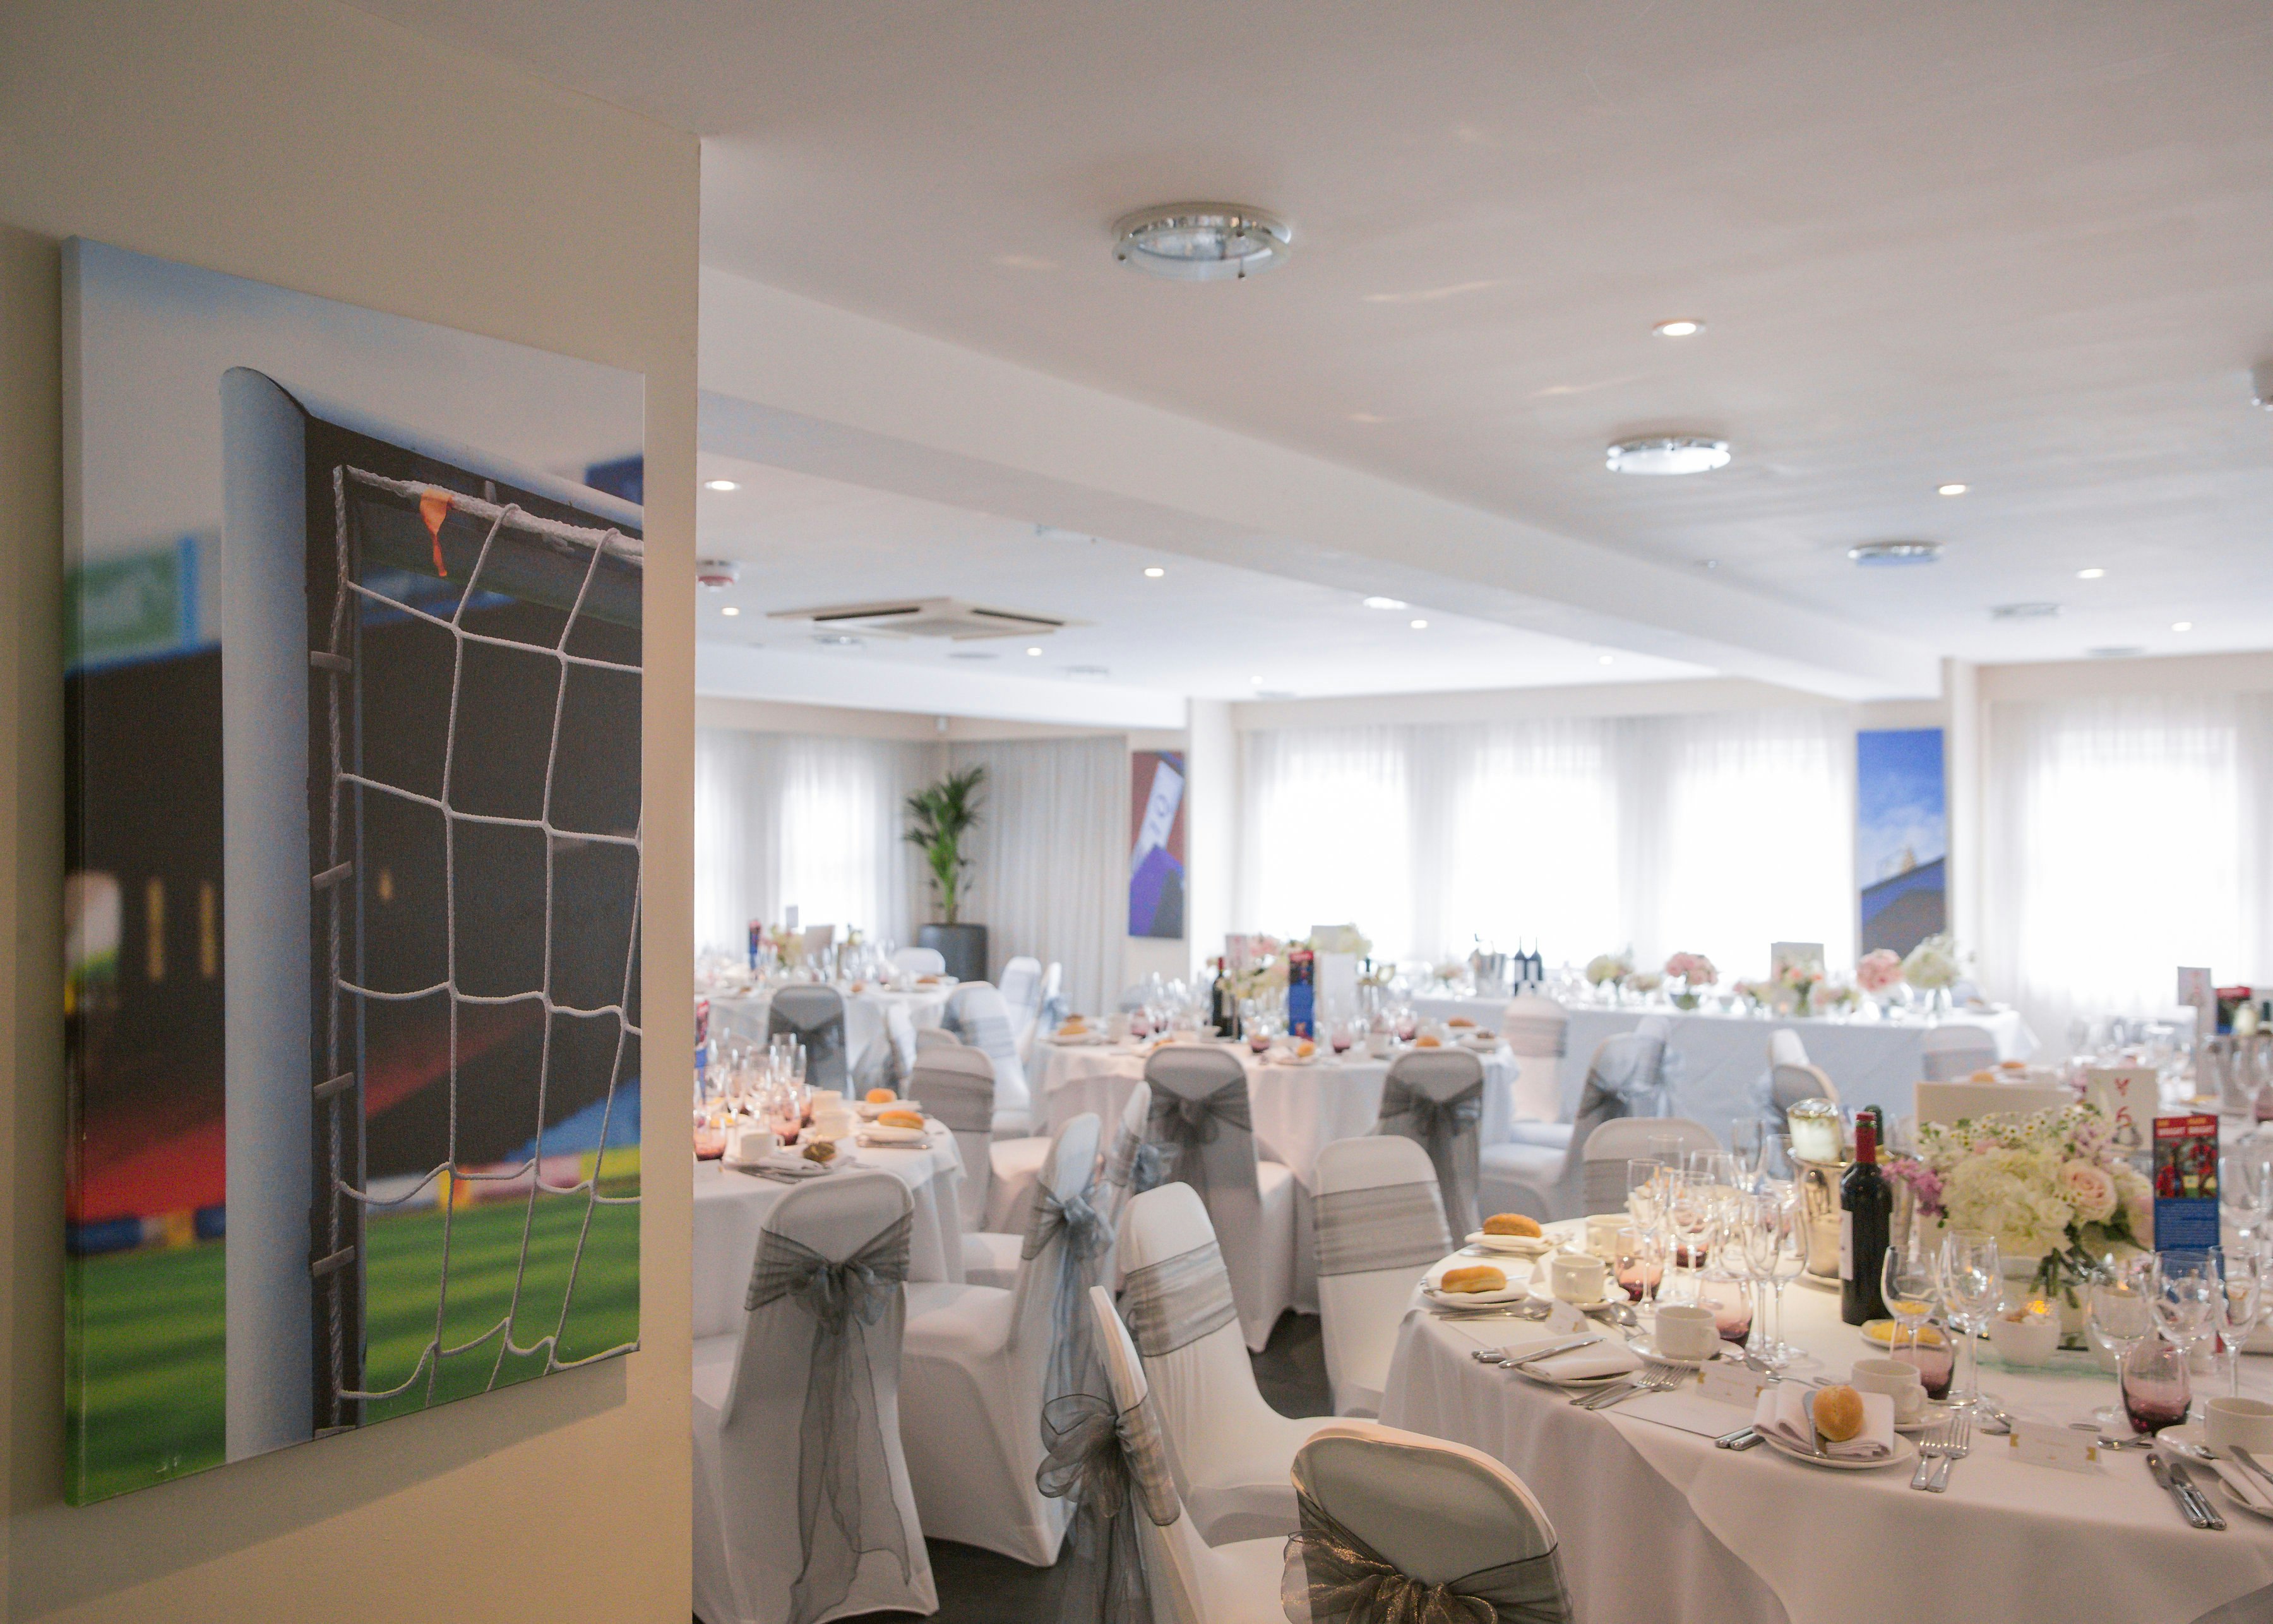 Selhurst Park Stadium, Crystal Palace Football Club - Speroni's Restaurant image 4